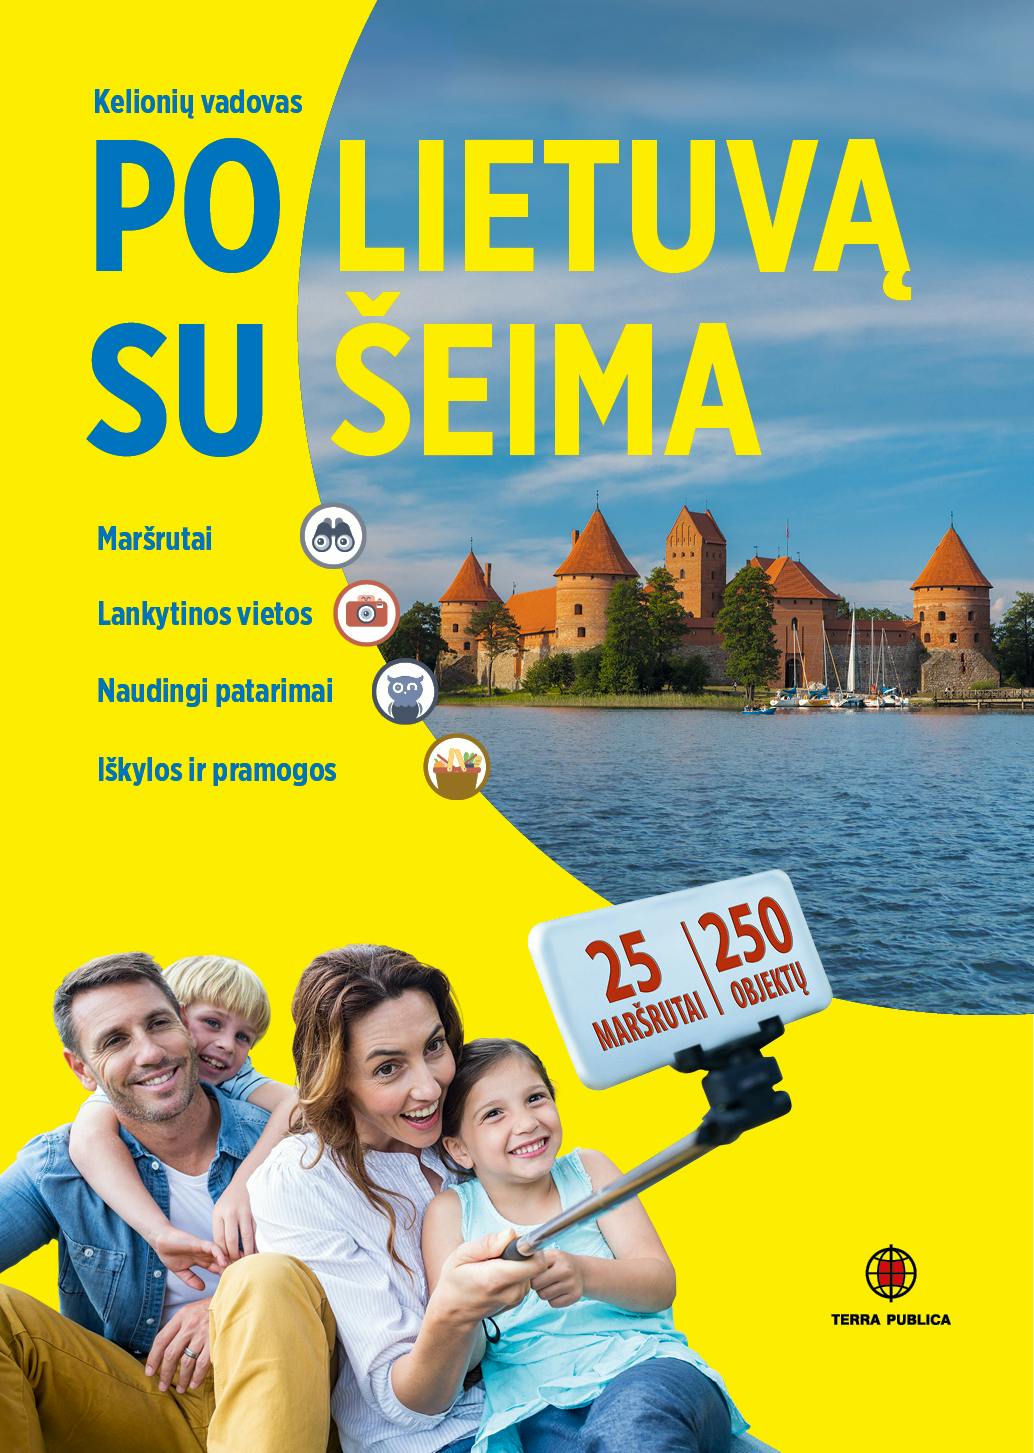 Po Lietuvą su šeima